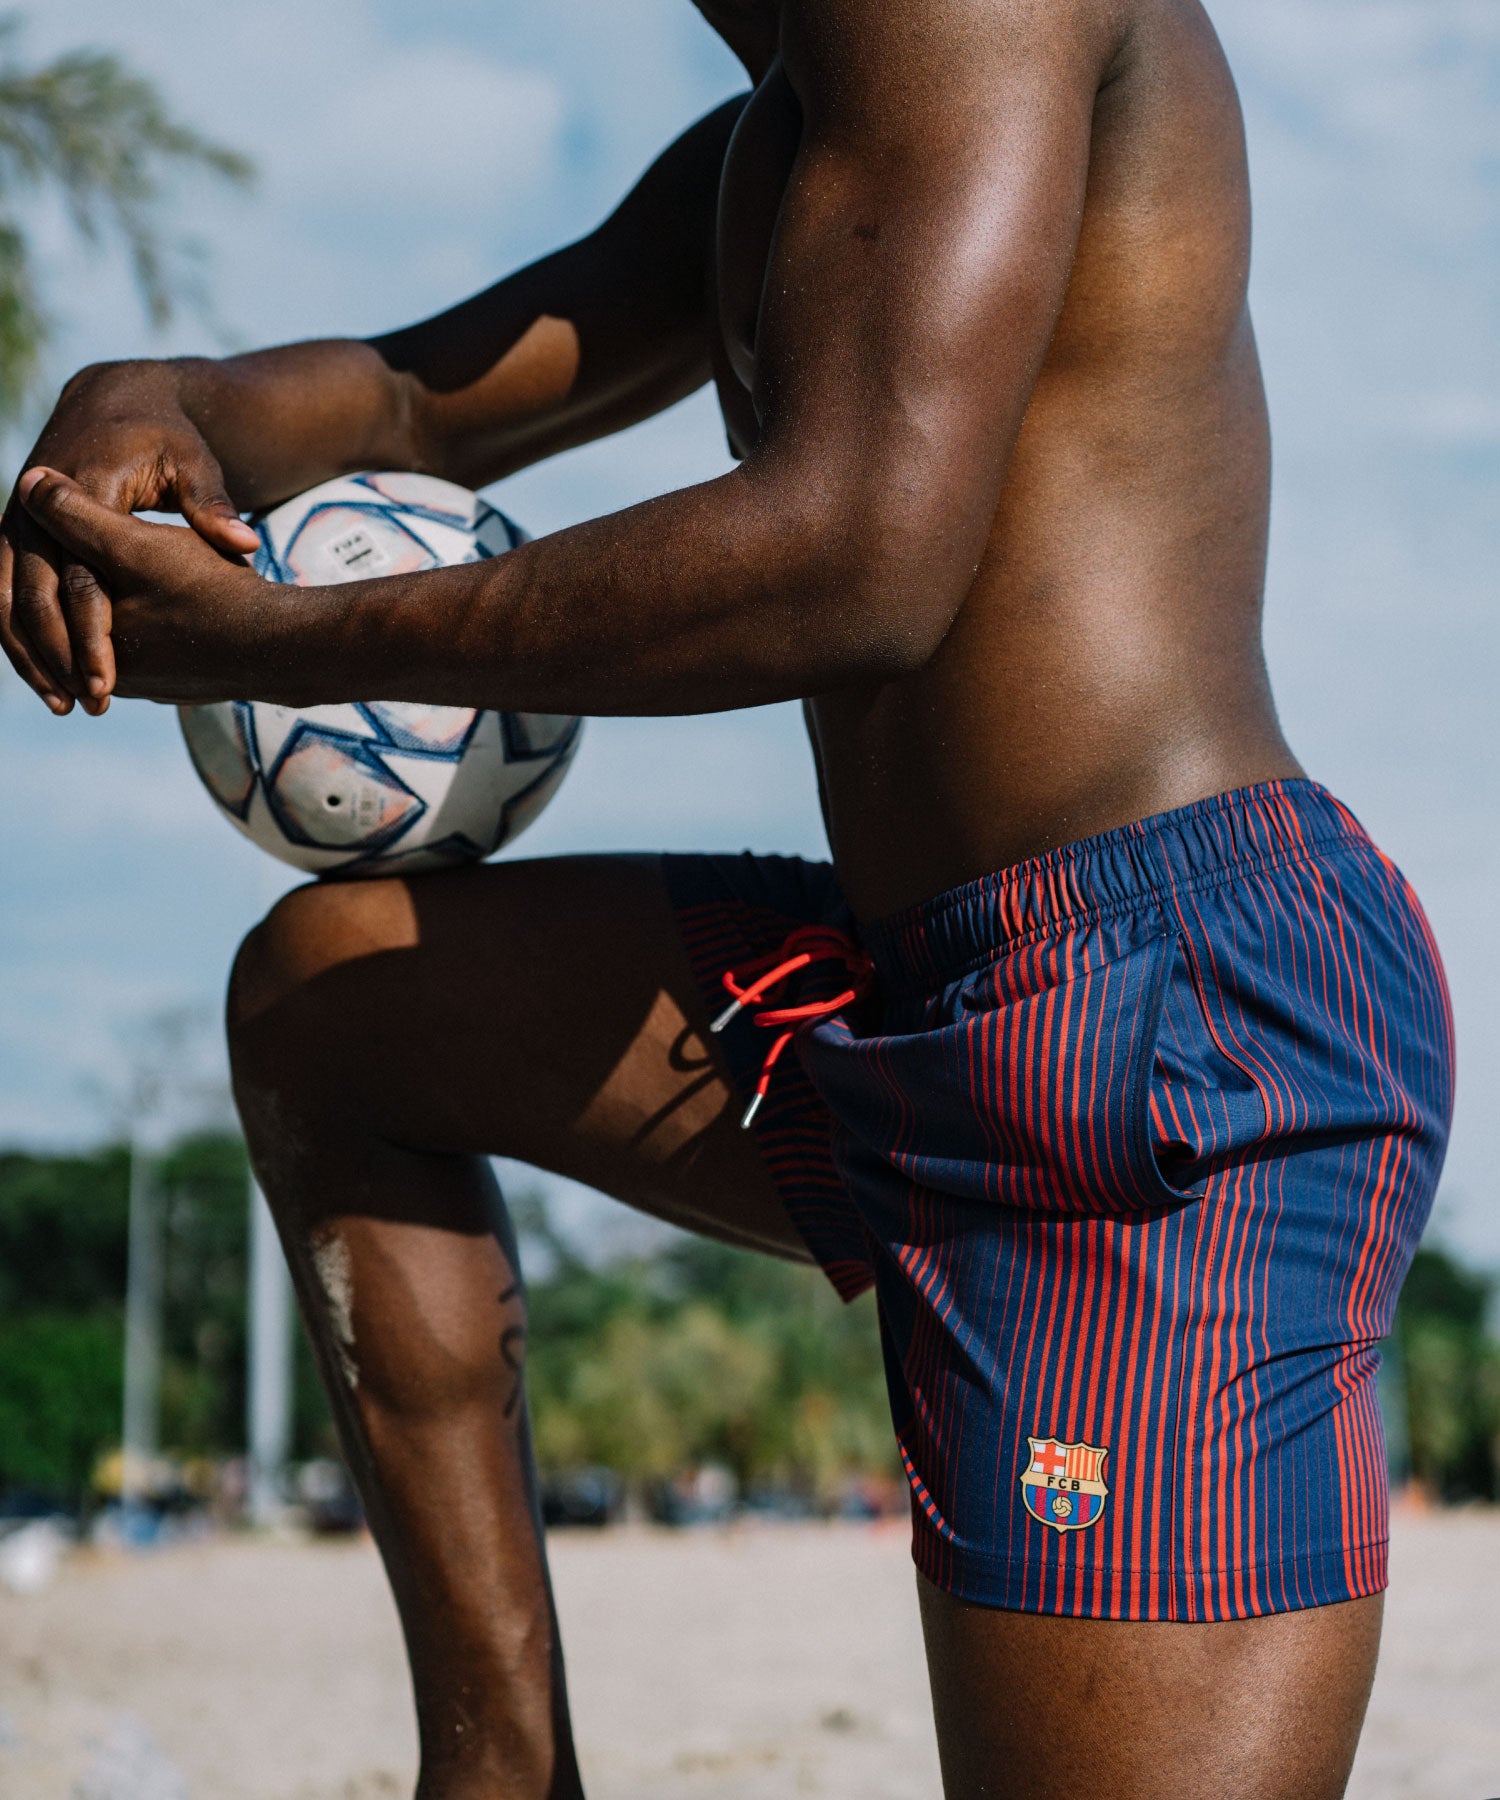 FC Barcelona Swim Shorts (Limited Edition)